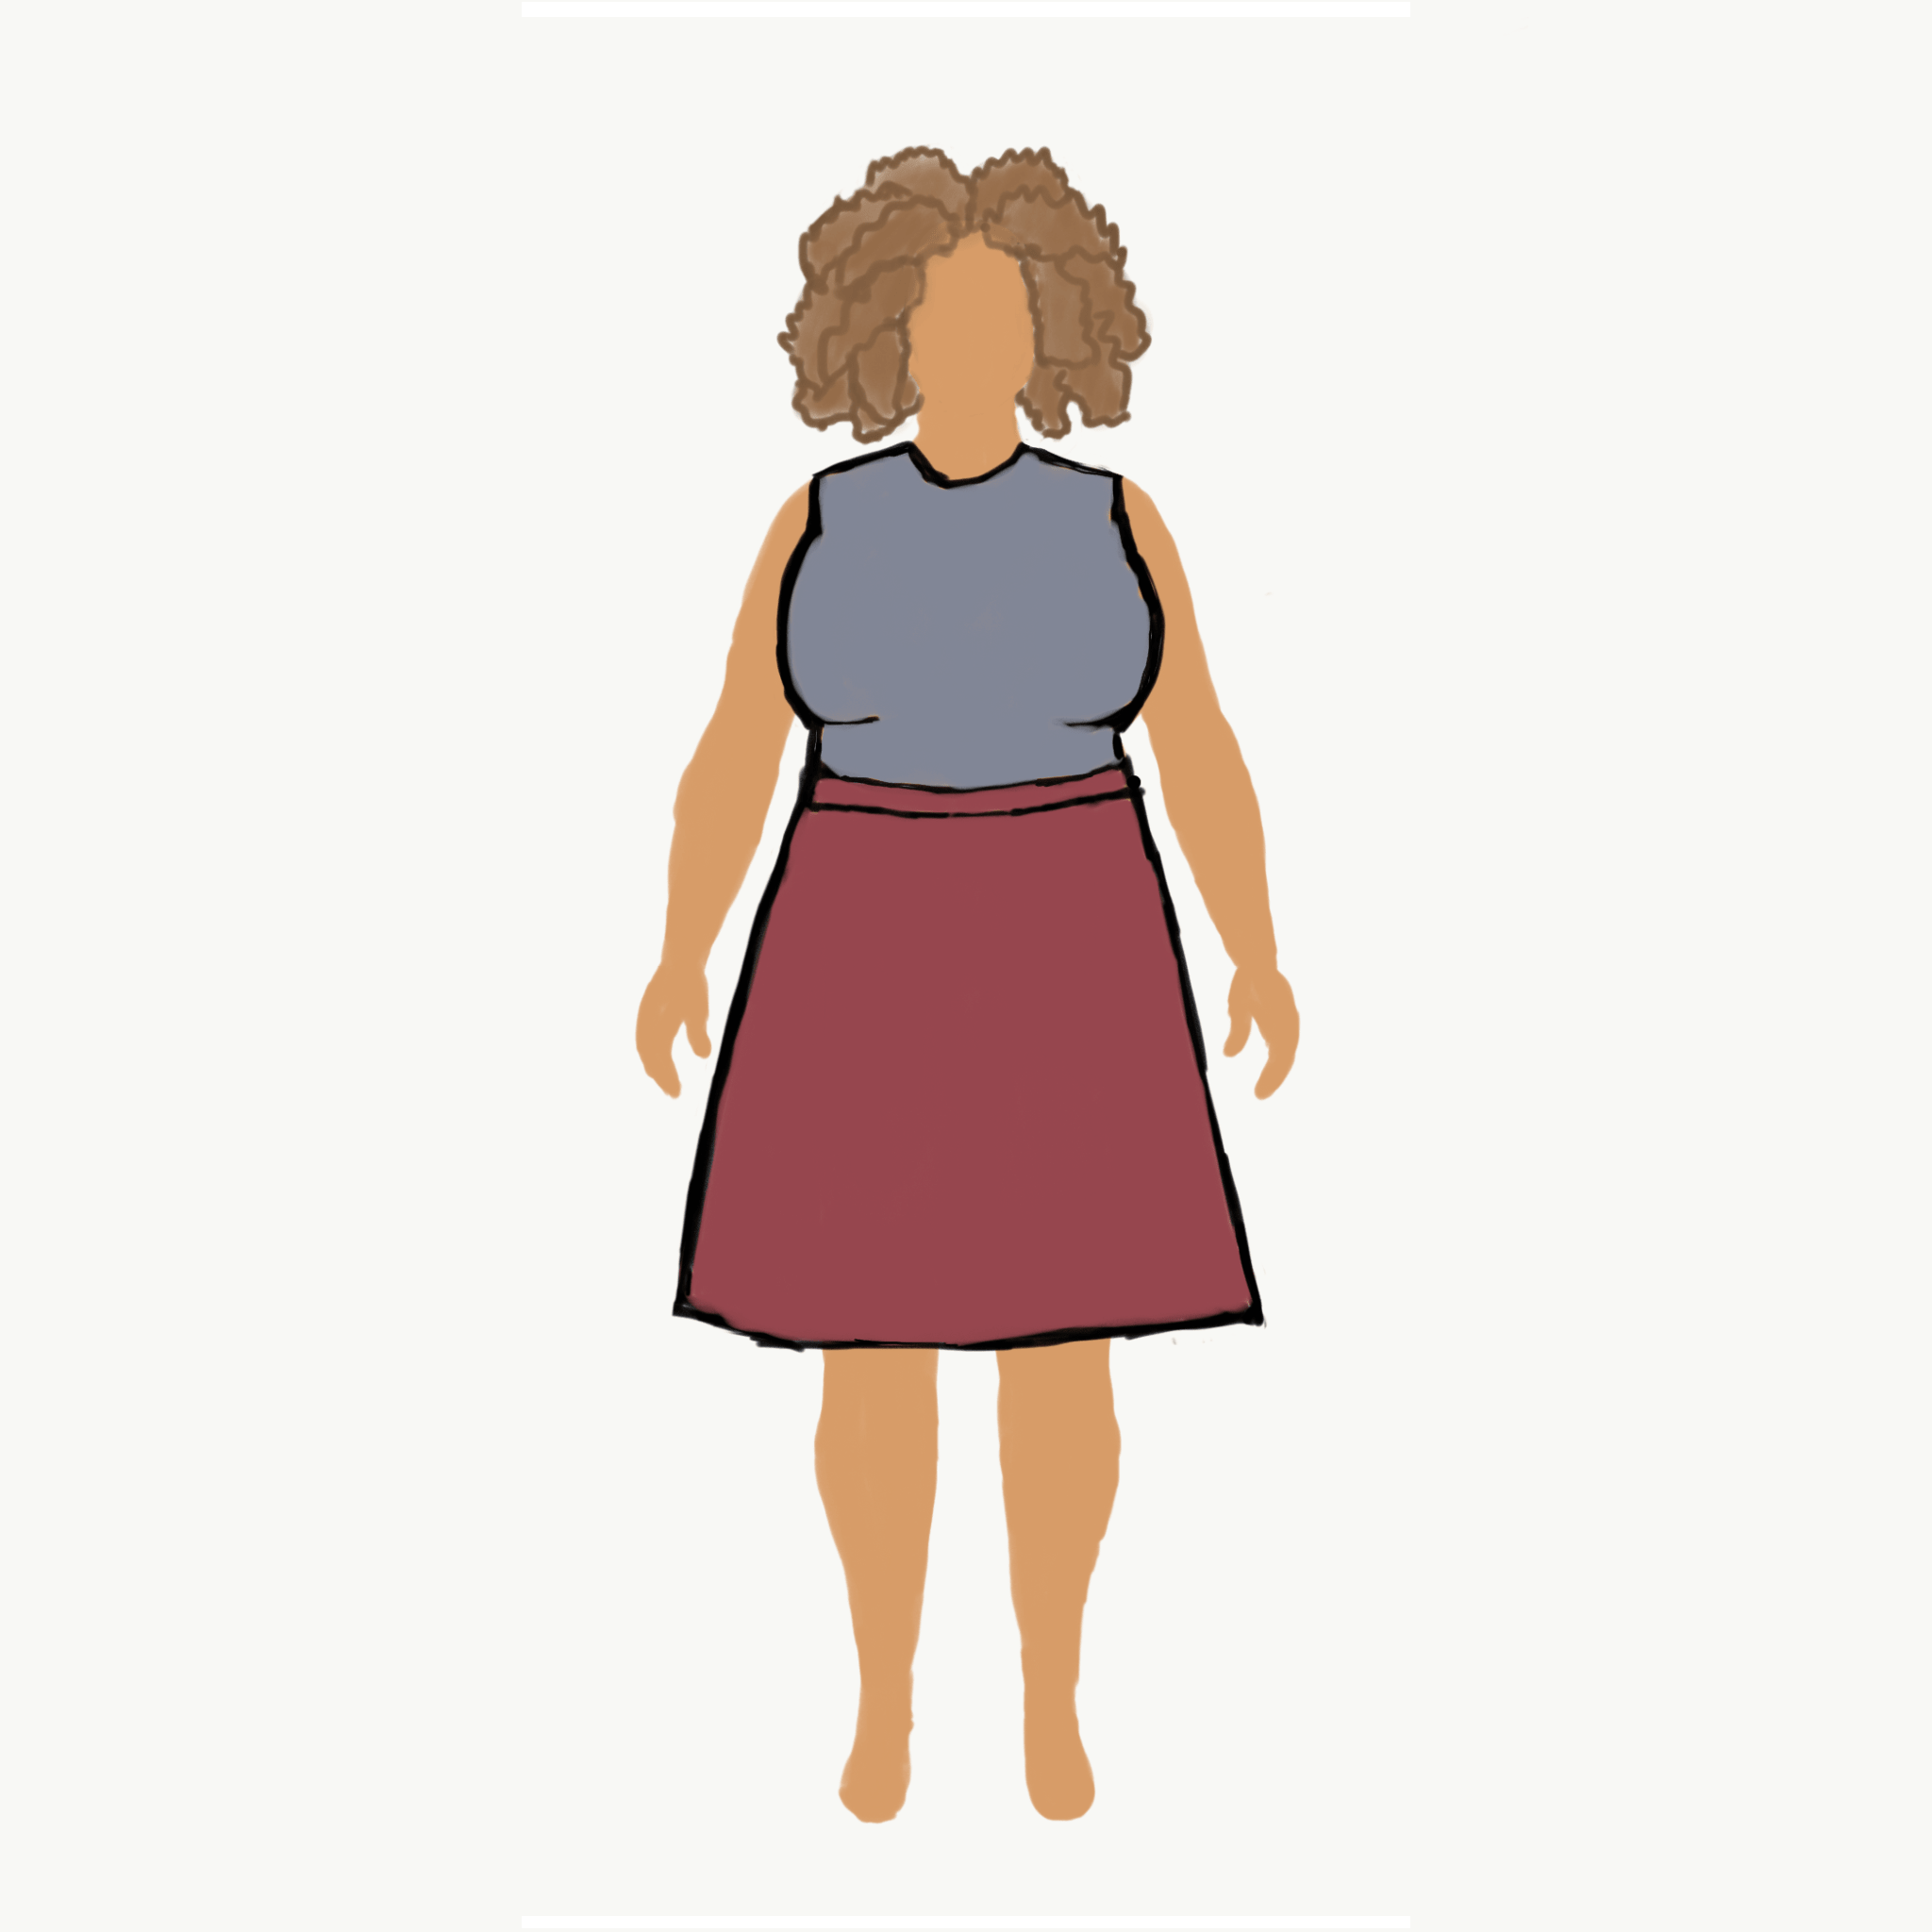 MyBodyModel Sketch - Gympsum Skirt with Inseam Pockets by Sierra Burrell